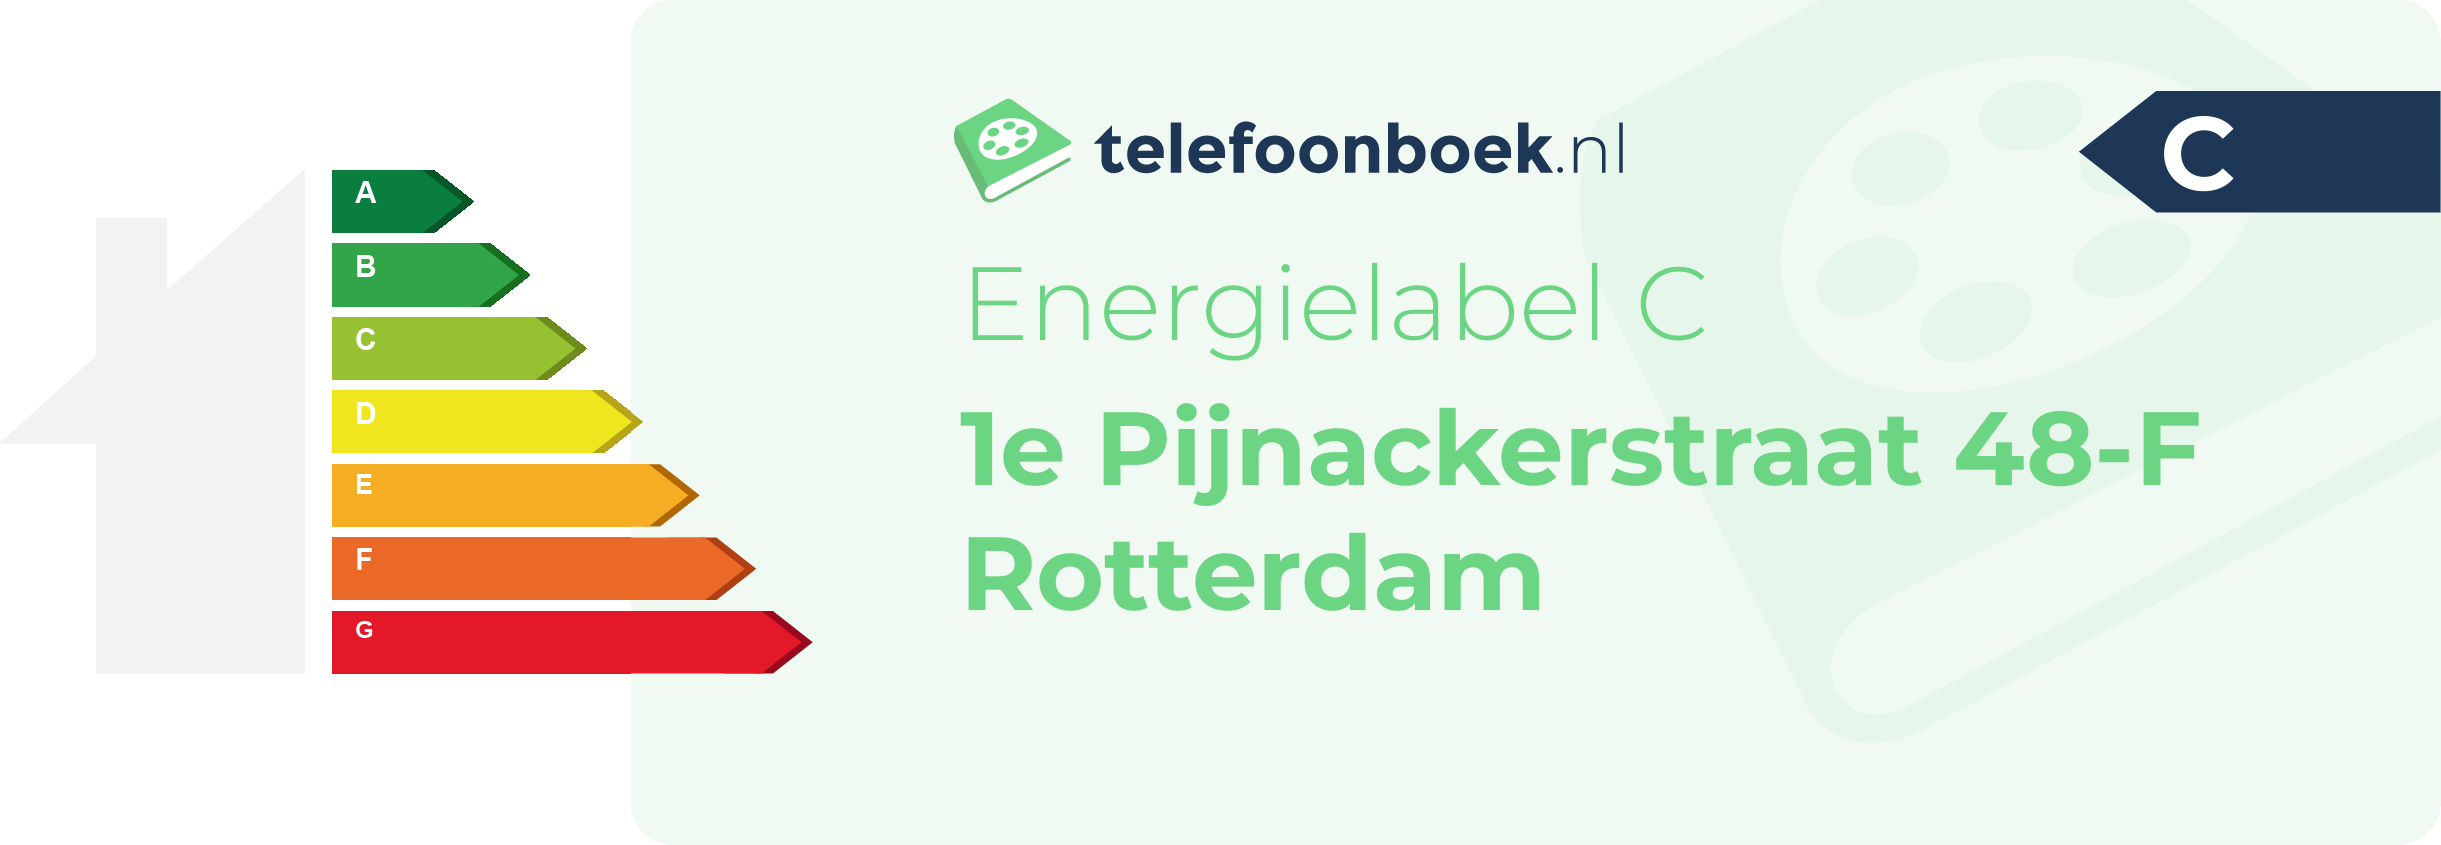 Energielabel 1e Pijnackerstraat 48-F Rotterdam